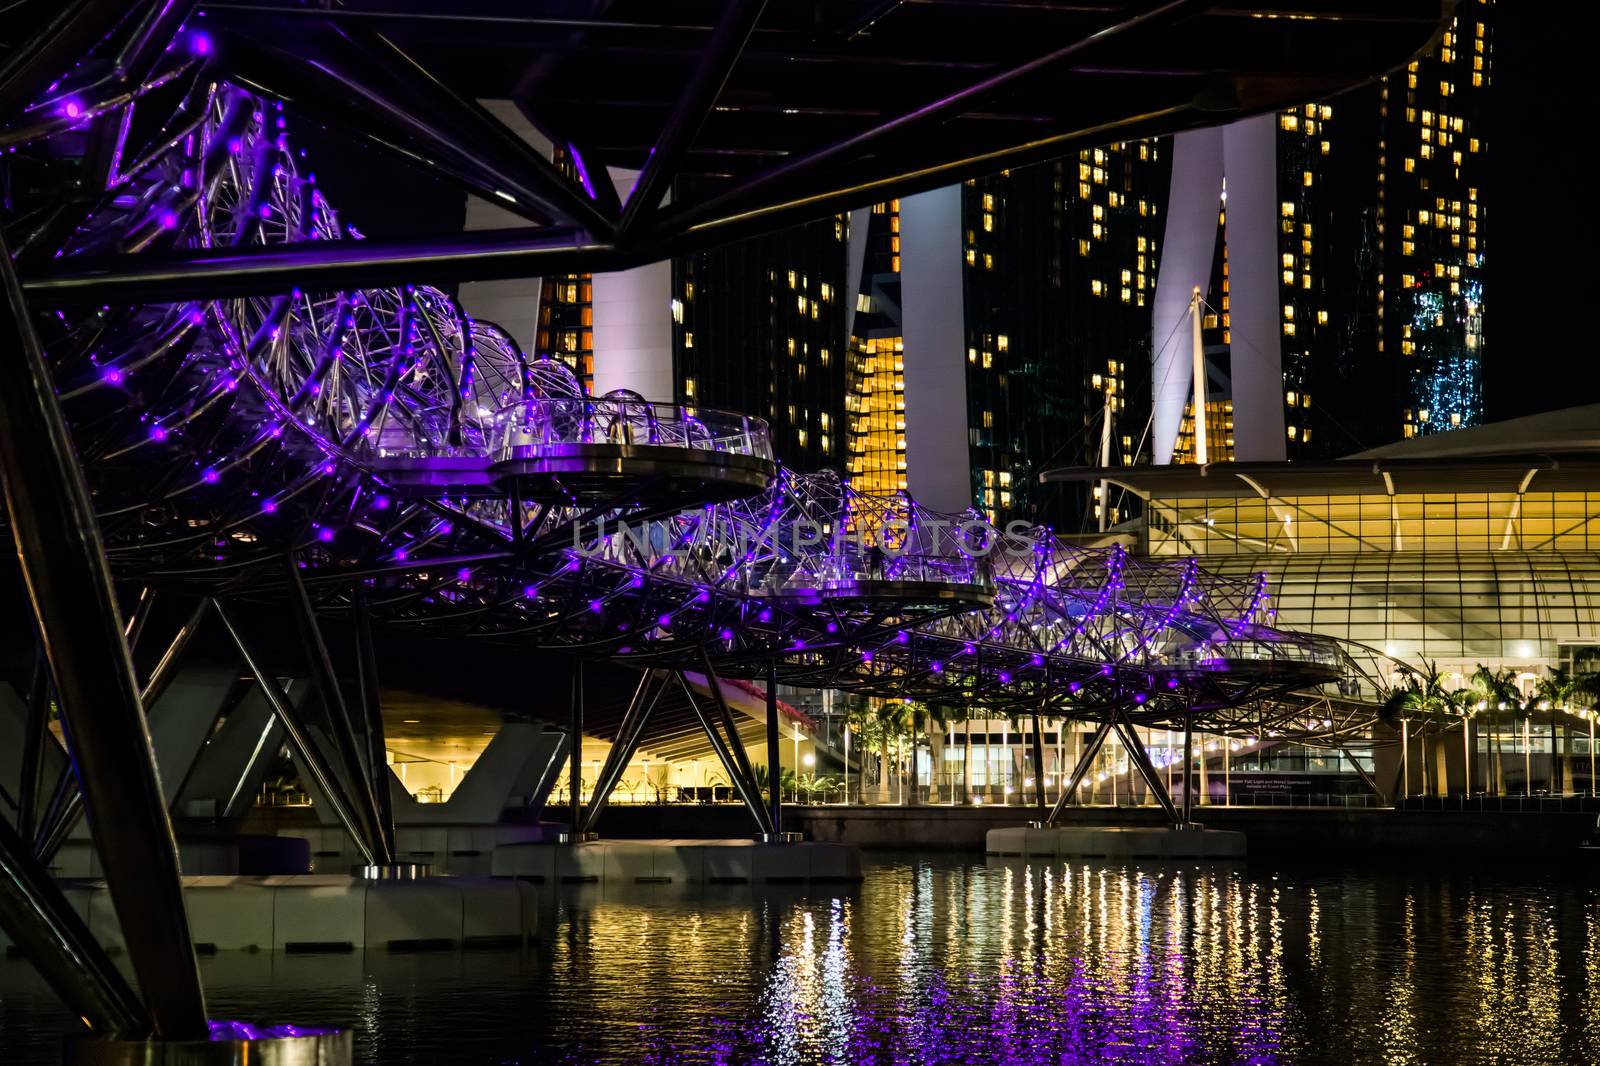 Singapore DNA Inspired Helix Bridge Illuminated at Night by phil_bird